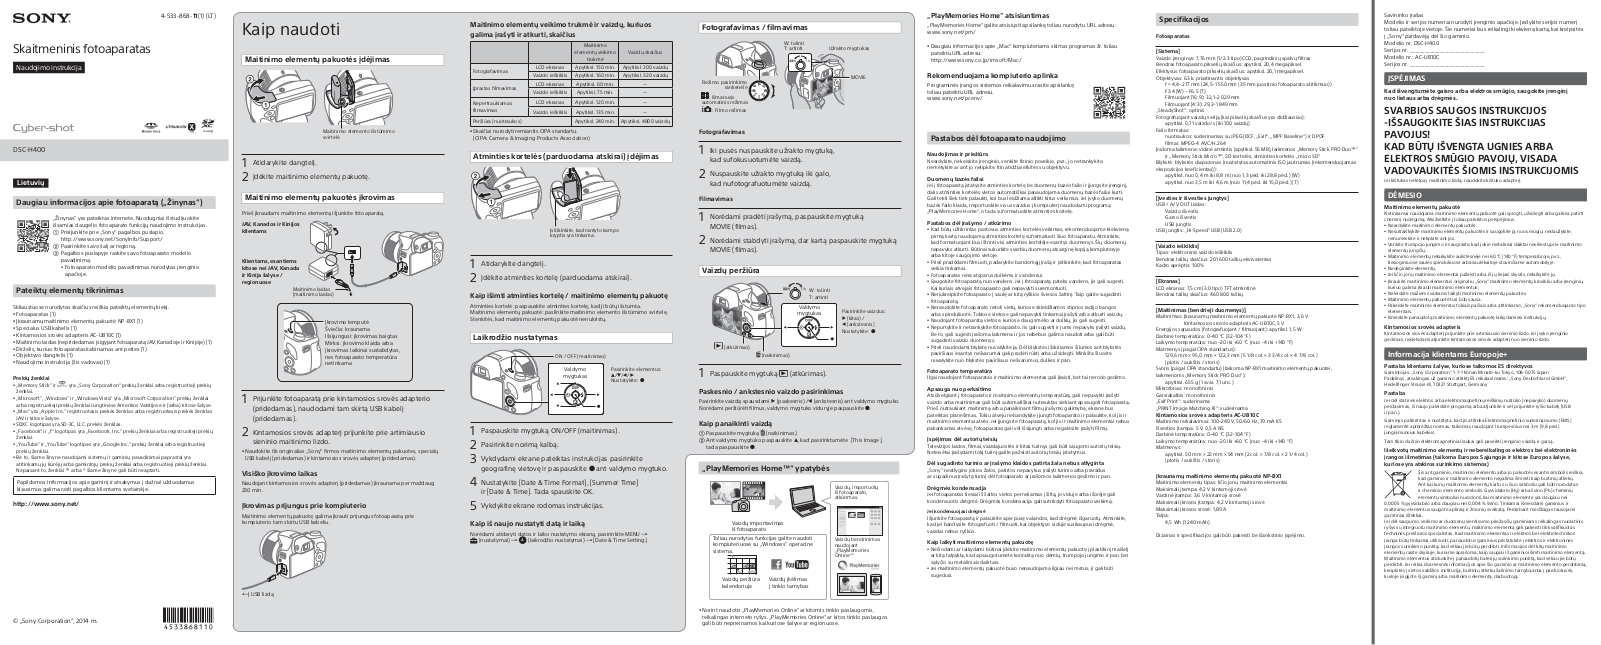 Sony DSC-H400 Instruction Manual